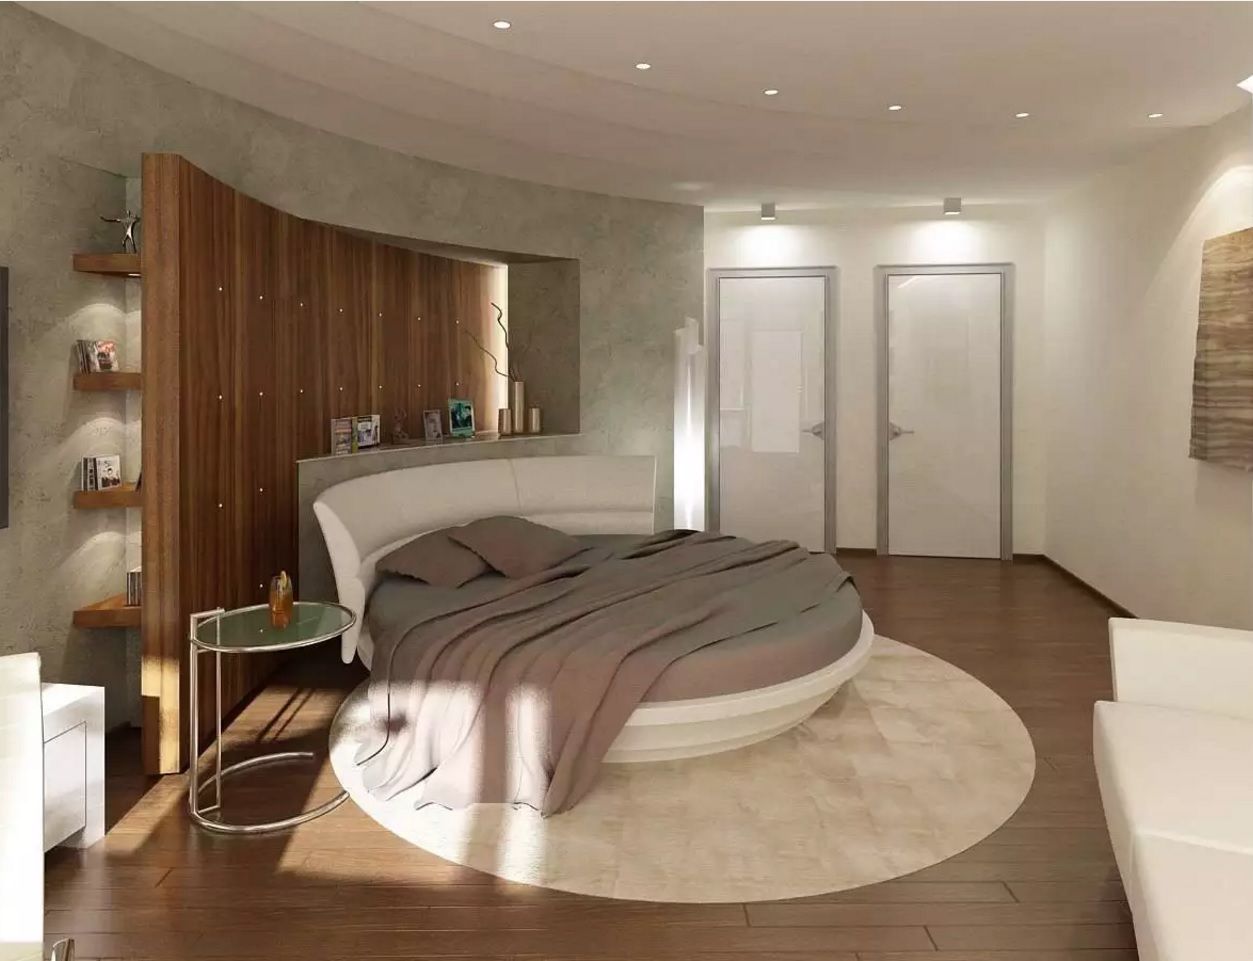 circle bedroom furniture set